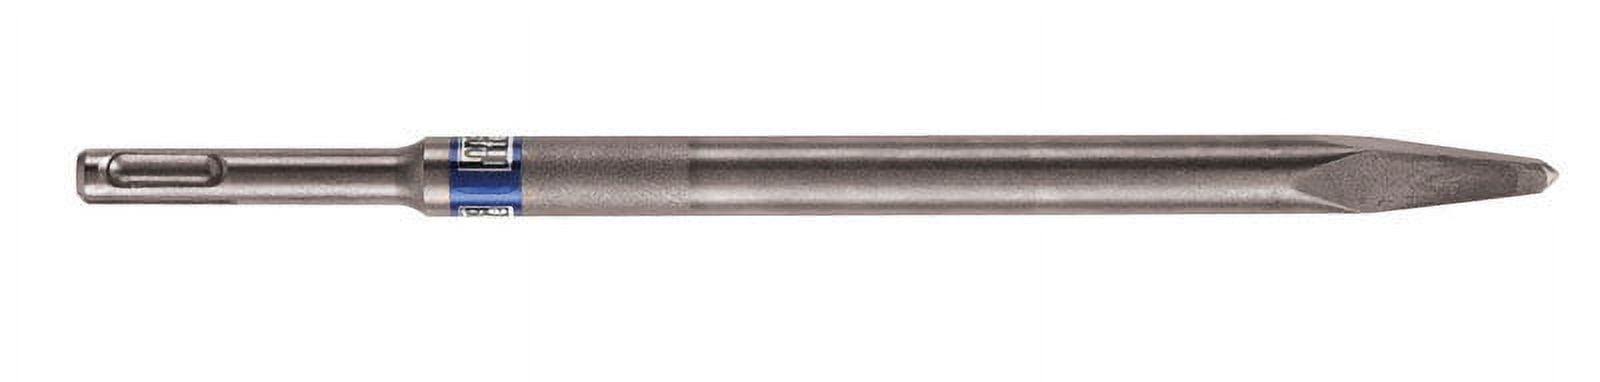 10 In. Point Sds-plus Bulldog Extreme Hammer Steel